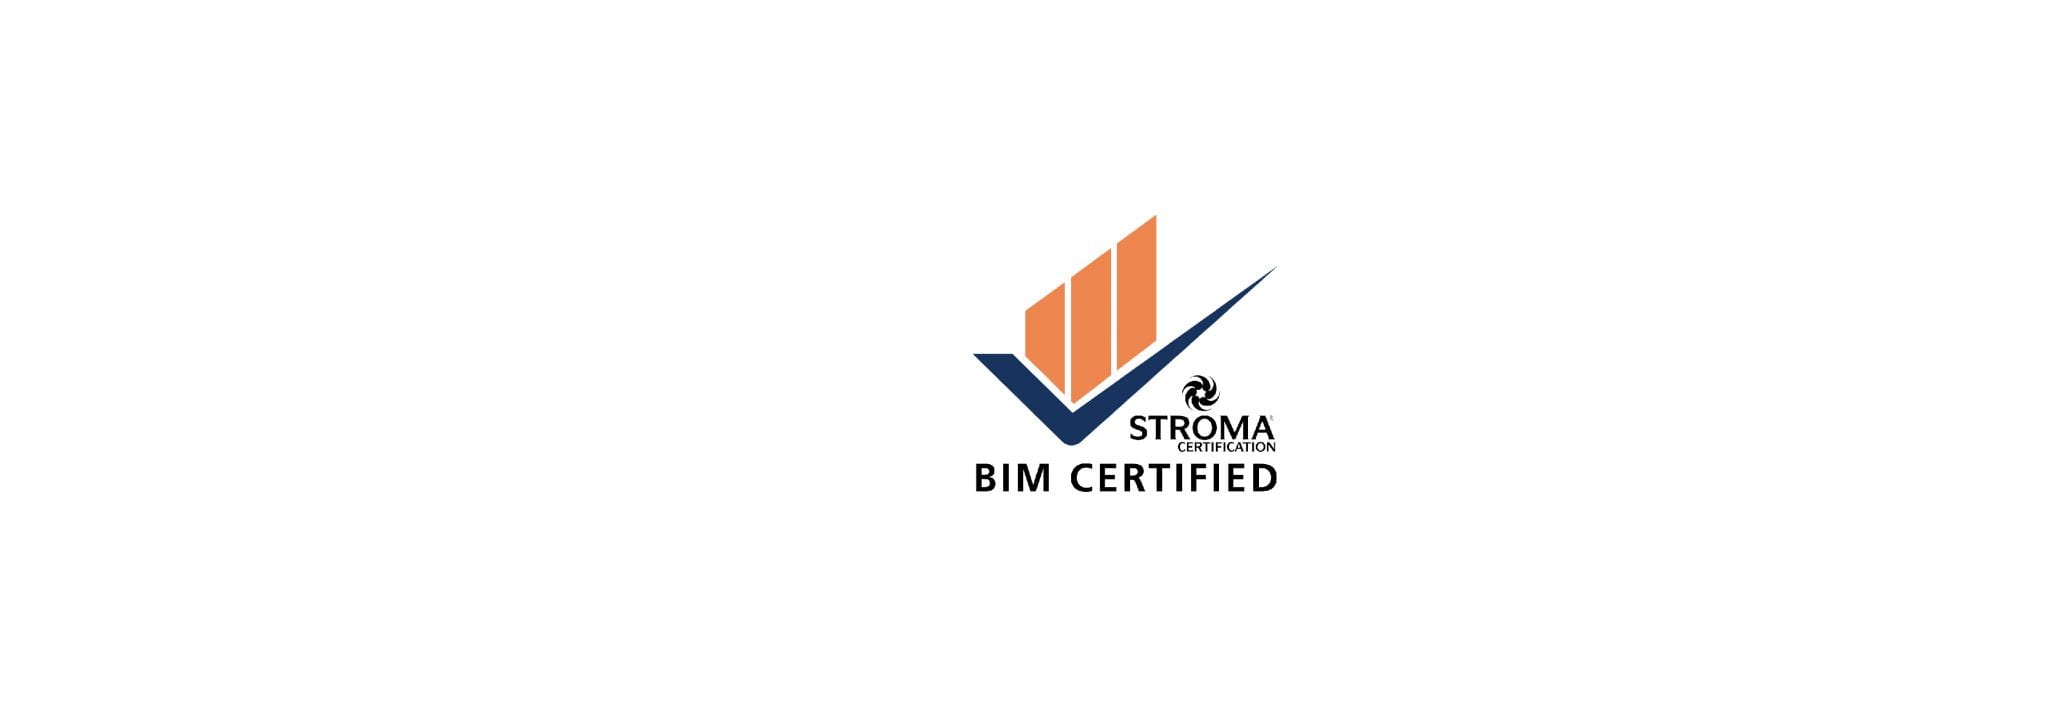 Bim Logo - bim logo for featured image-01-01-01 | Building, Construction ...